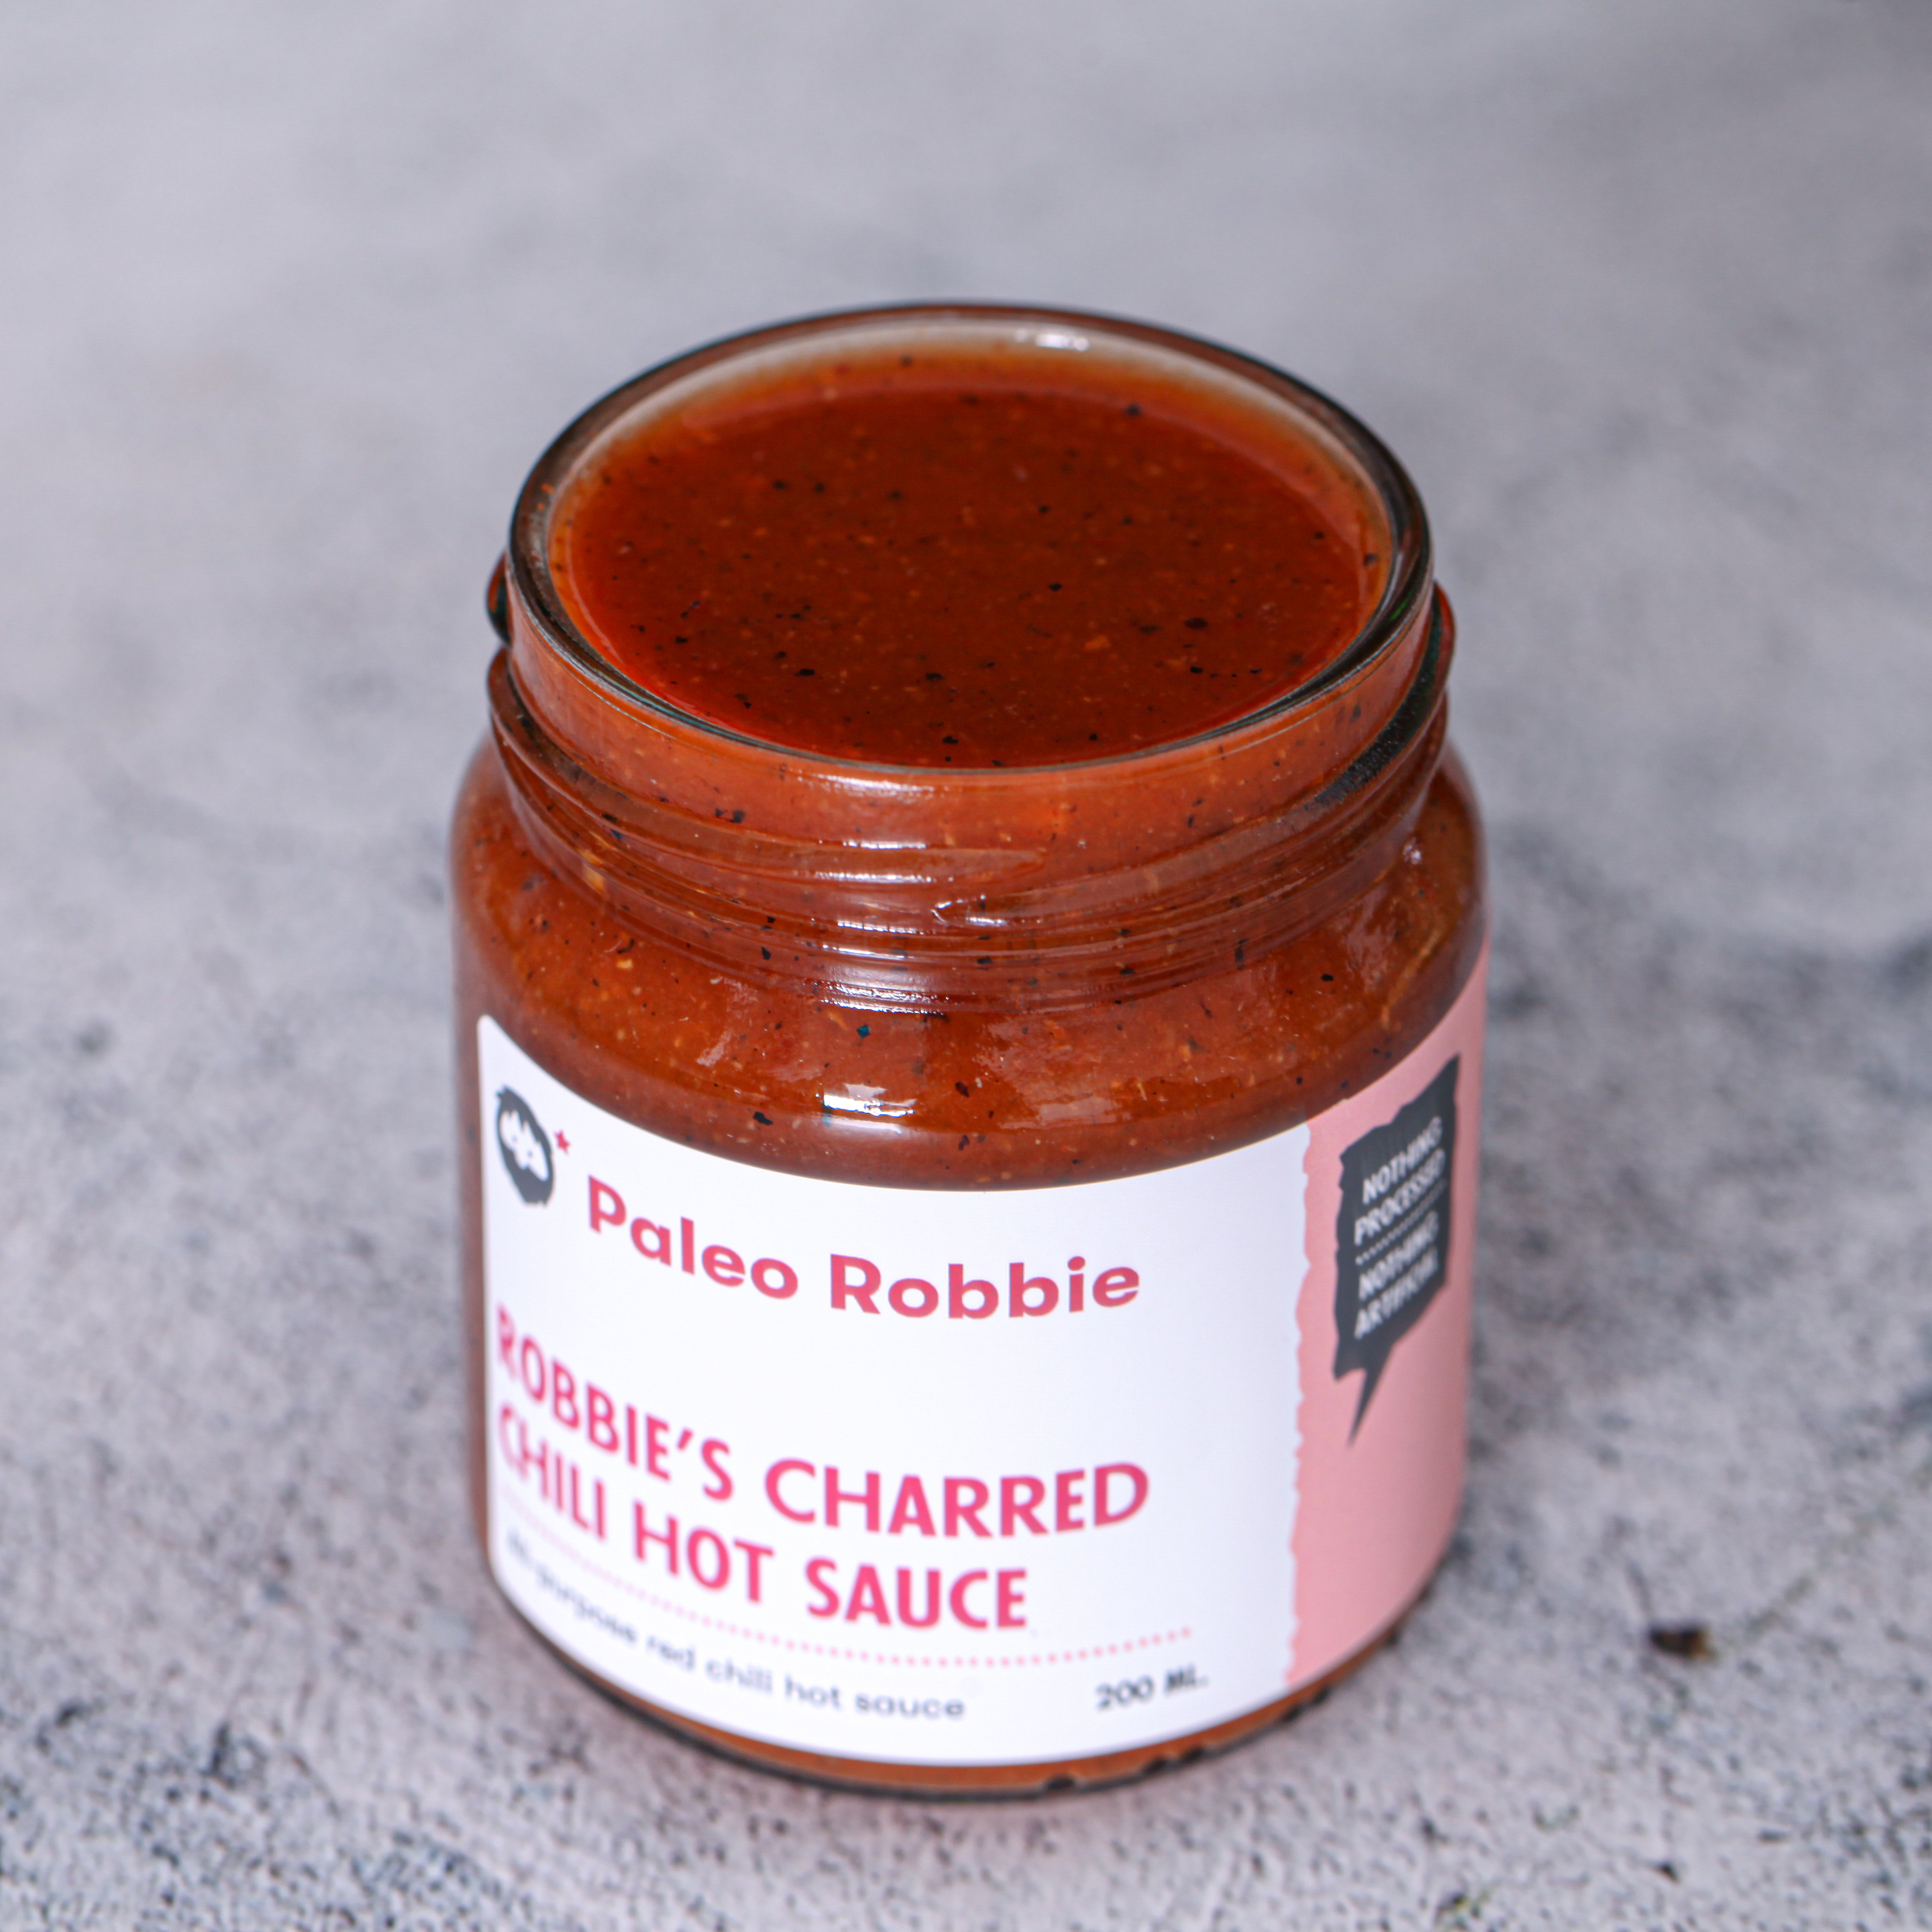 Robbie's Charred Chili Hot Sauce